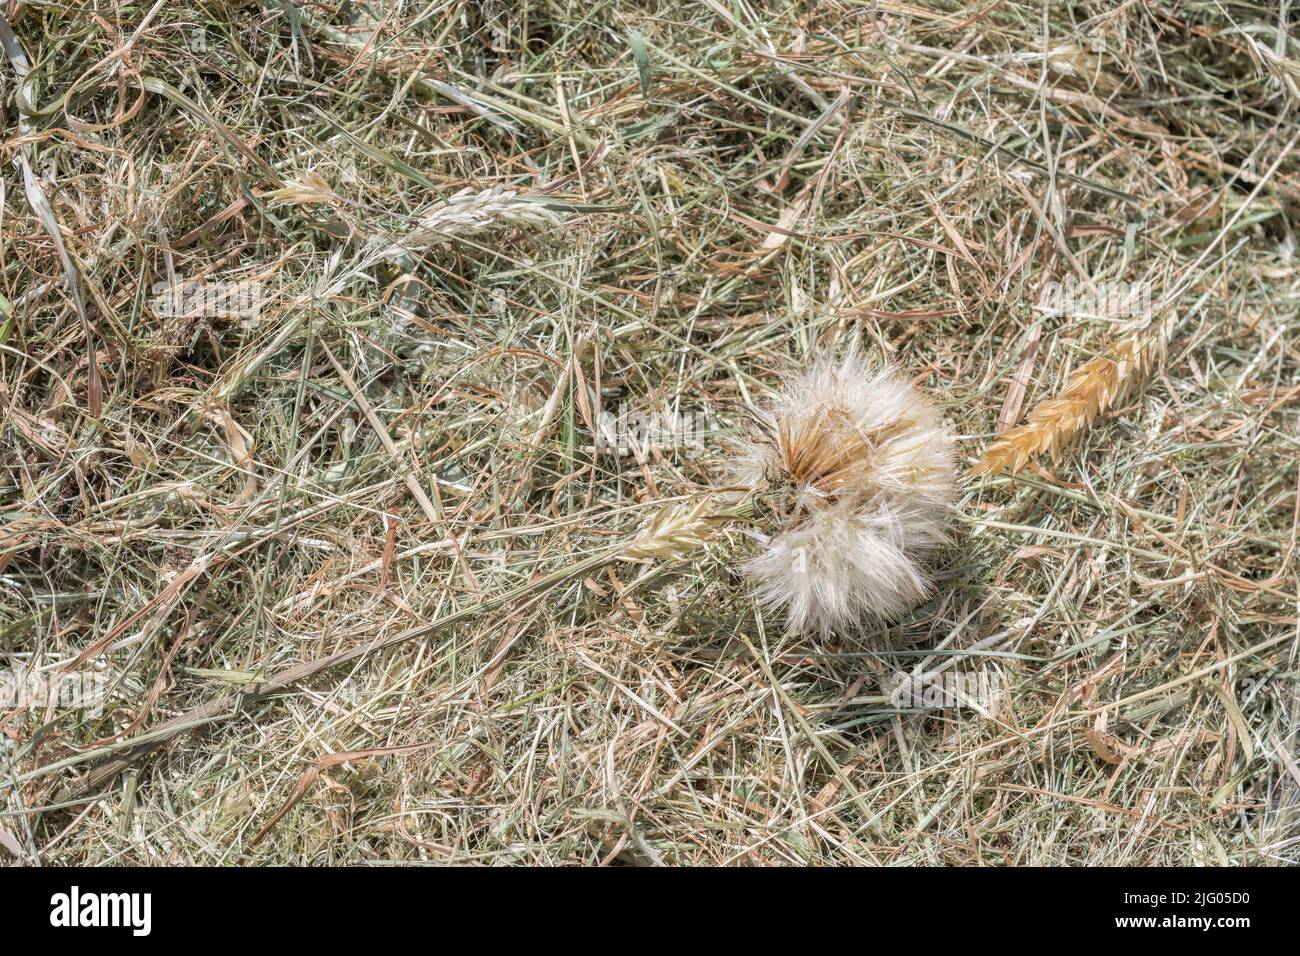 Cut dead grass and seeding dandelion head in sunshine. For lifeless, dead plants, grass mulch. Stock Photo